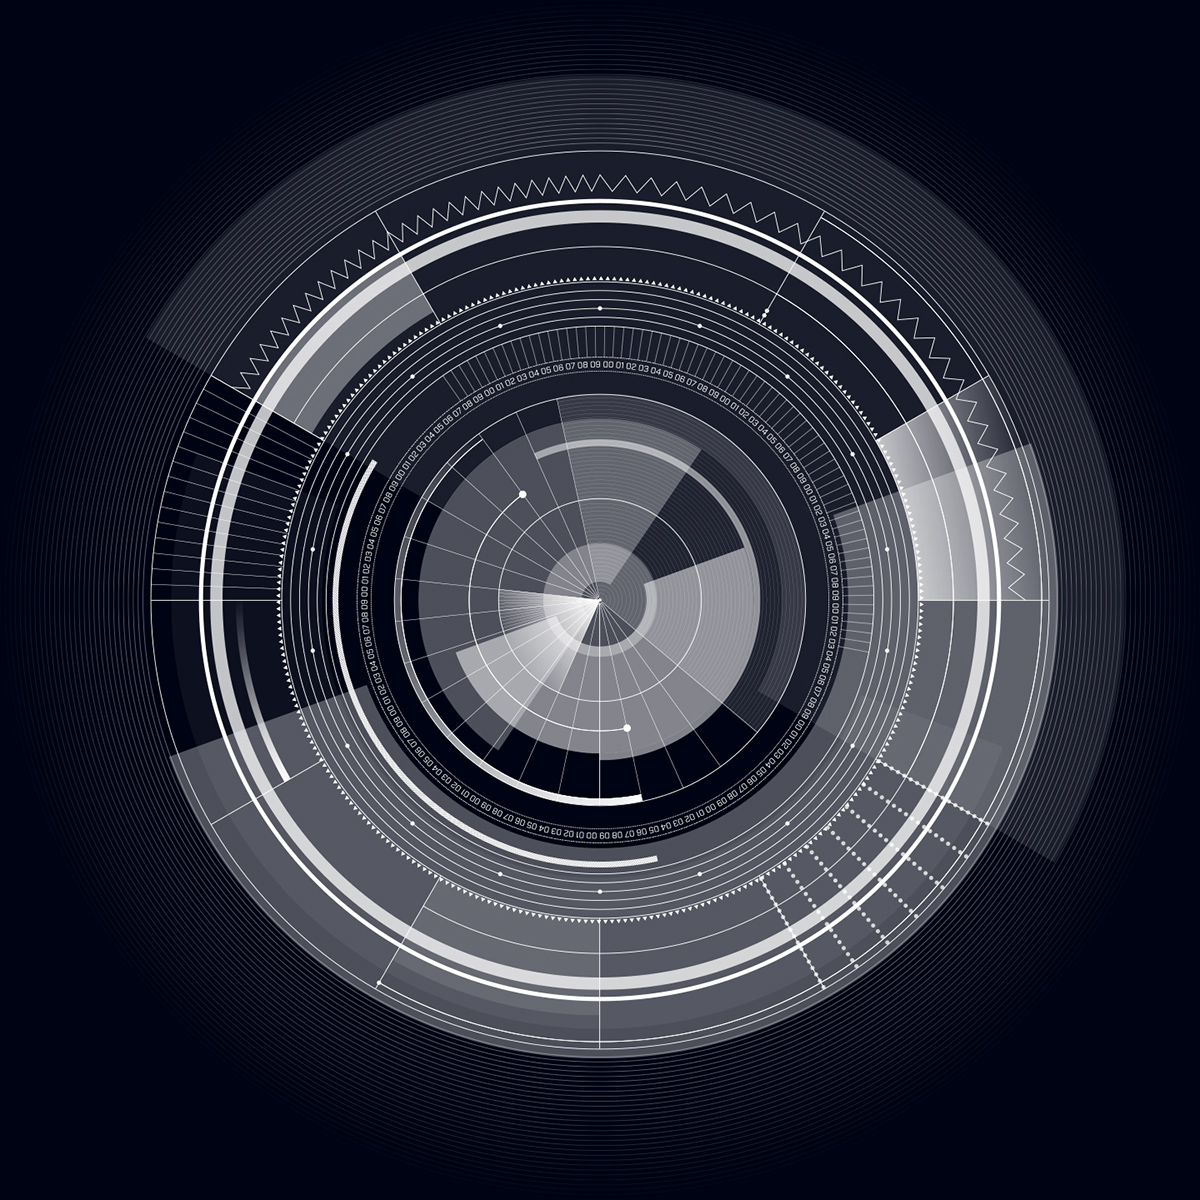 breakcore weyheyhey sounds circular future techinal vector circle round complex